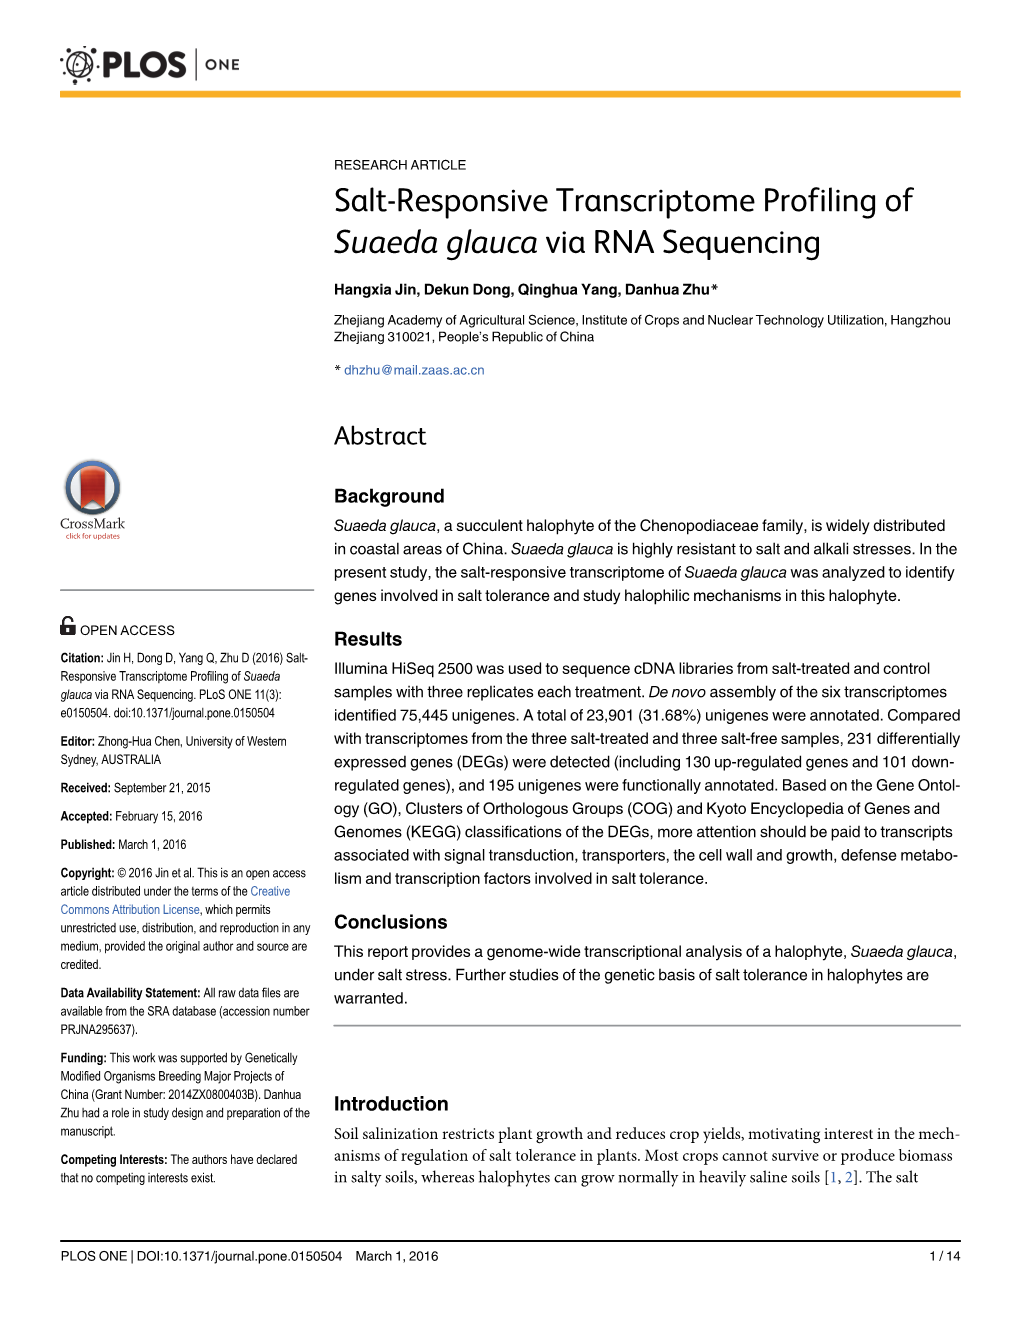 Salt-Responsive Transcriptome Profiling of Suaeda Glauca Via RNA Sequencing